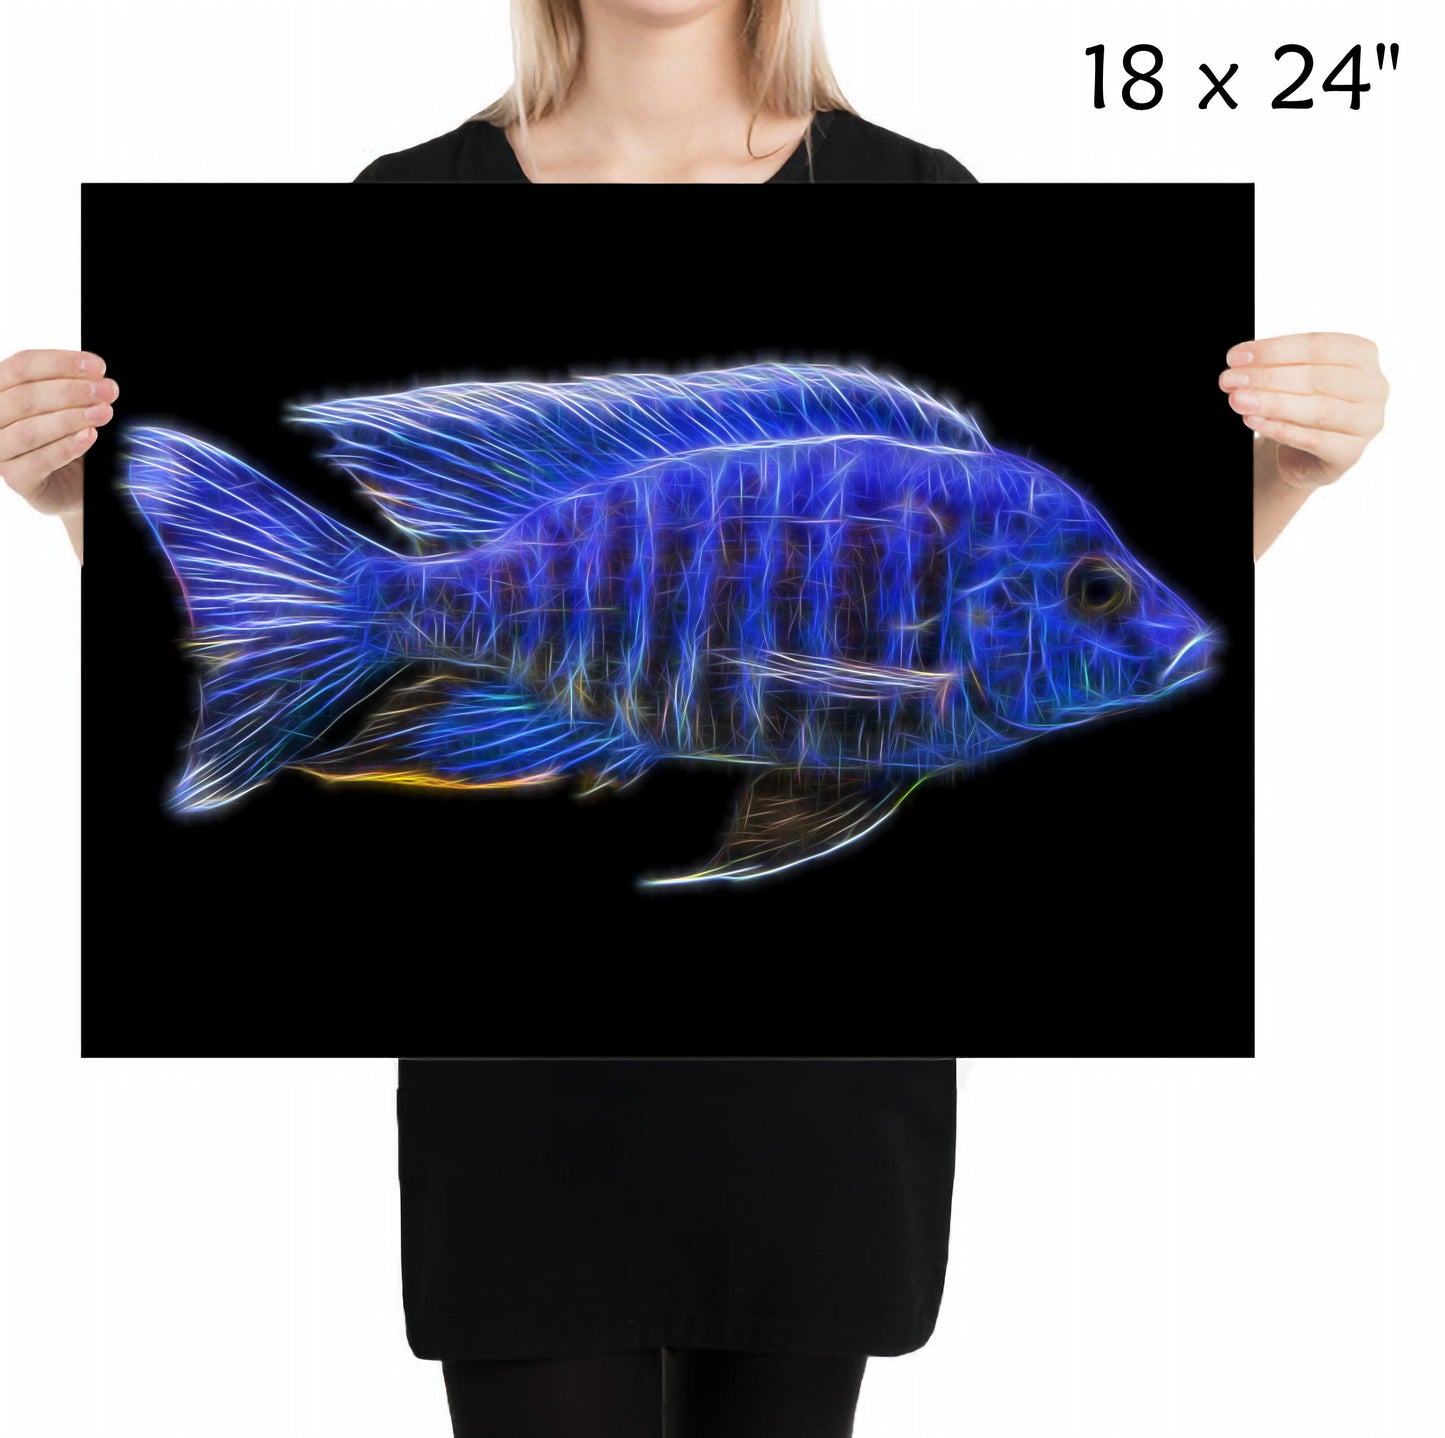 Blue Regal Peacock Cichlid Fish Print with Stunning Fractal Art Design. Aulonocara